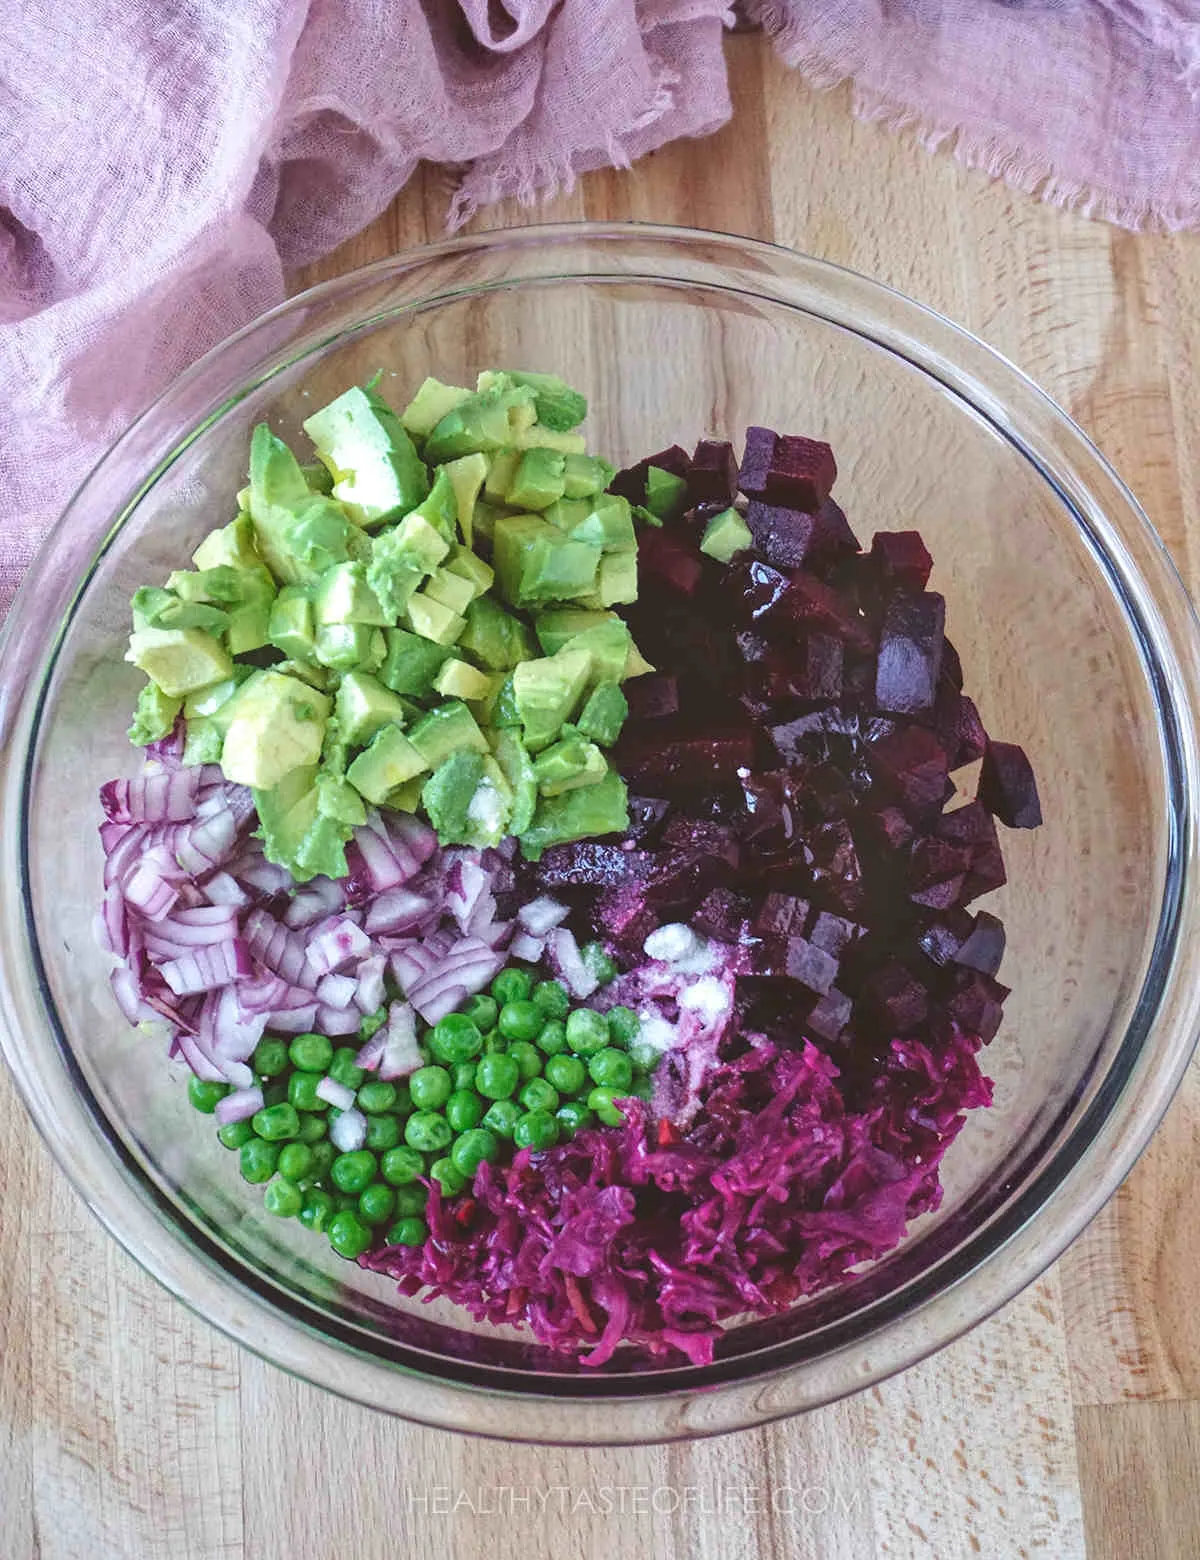 Combine the ingredients for Russian Vinaigrette Salad.